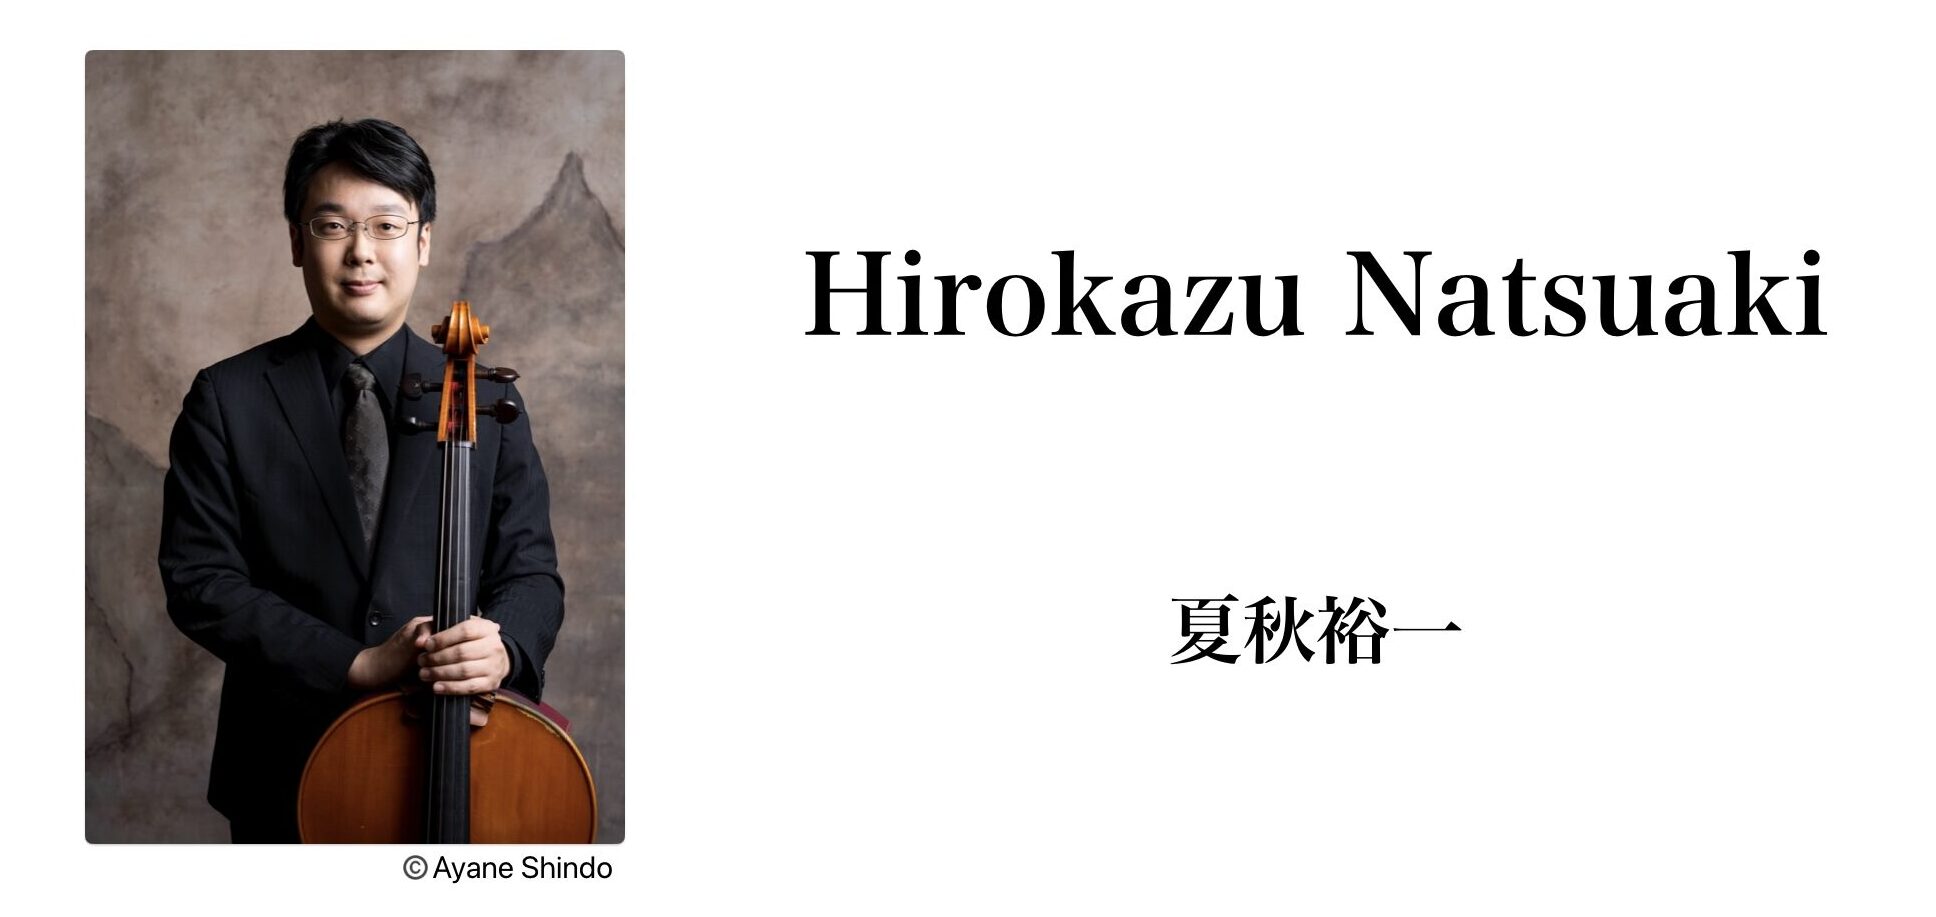 cellist 夏秋裕一 Hirokazu Natsuaki official website